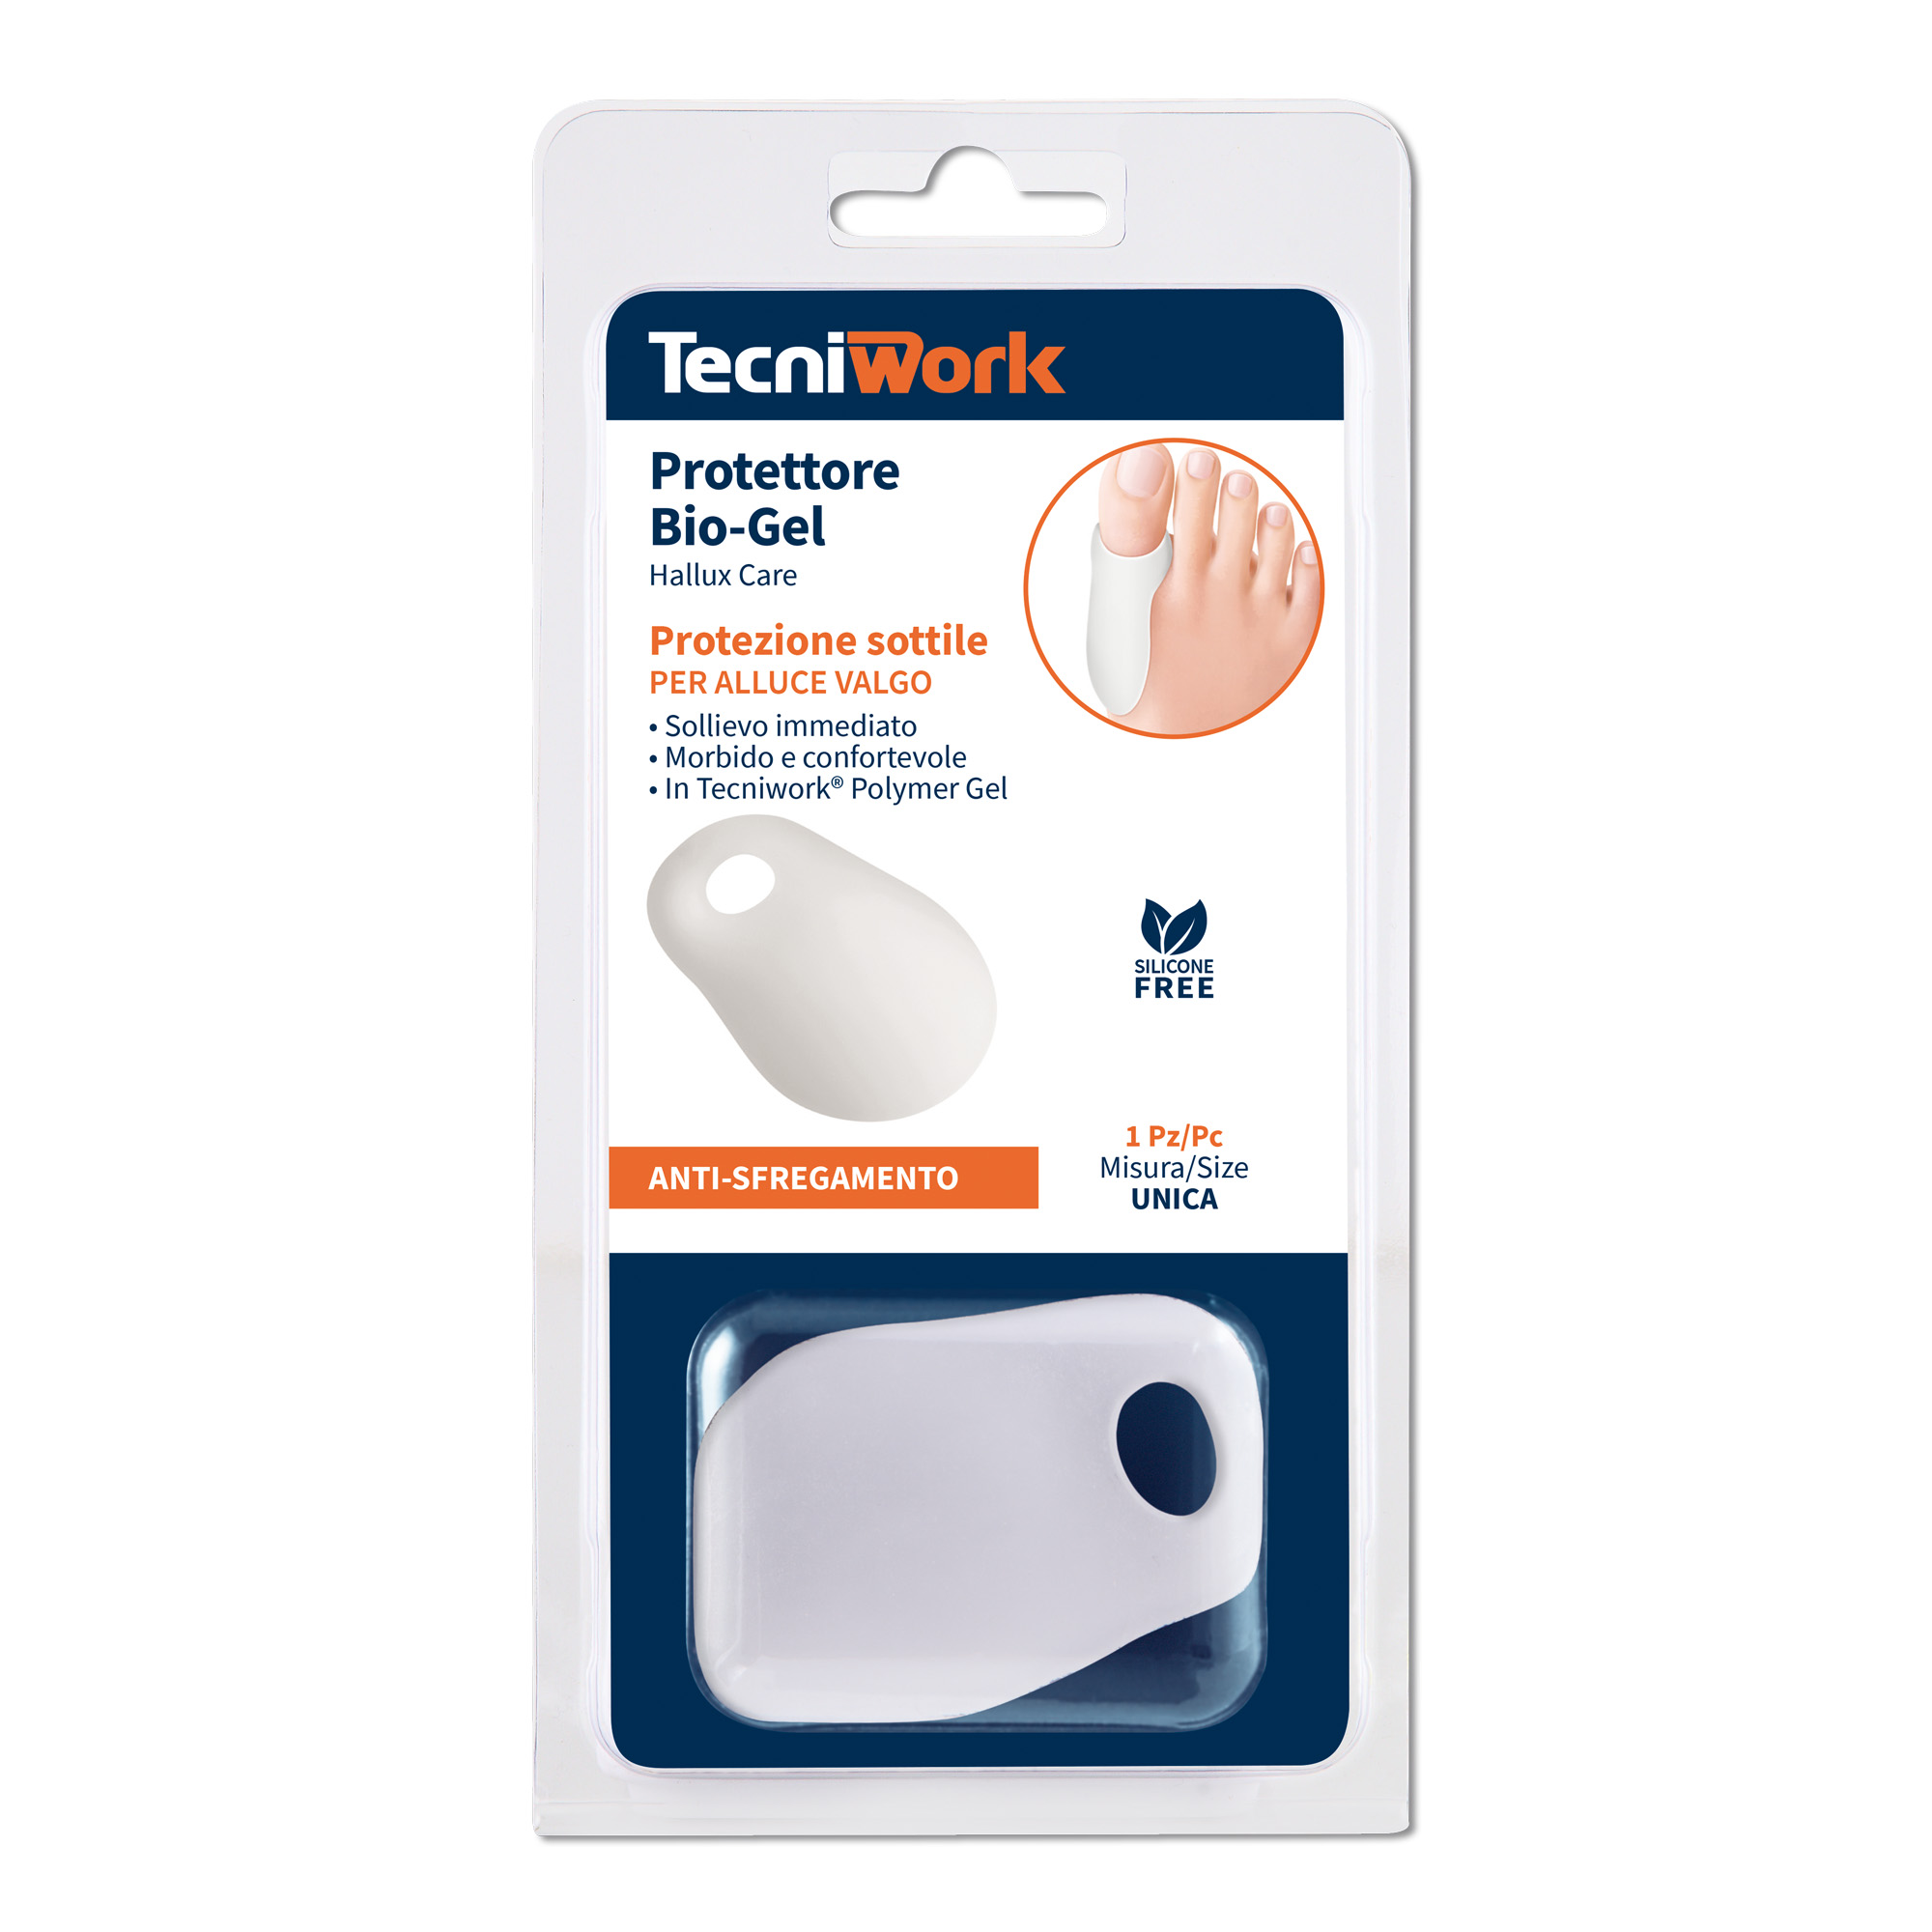 Thin Tecniwork Polymer Gel toe protector Bio-Gel transparent